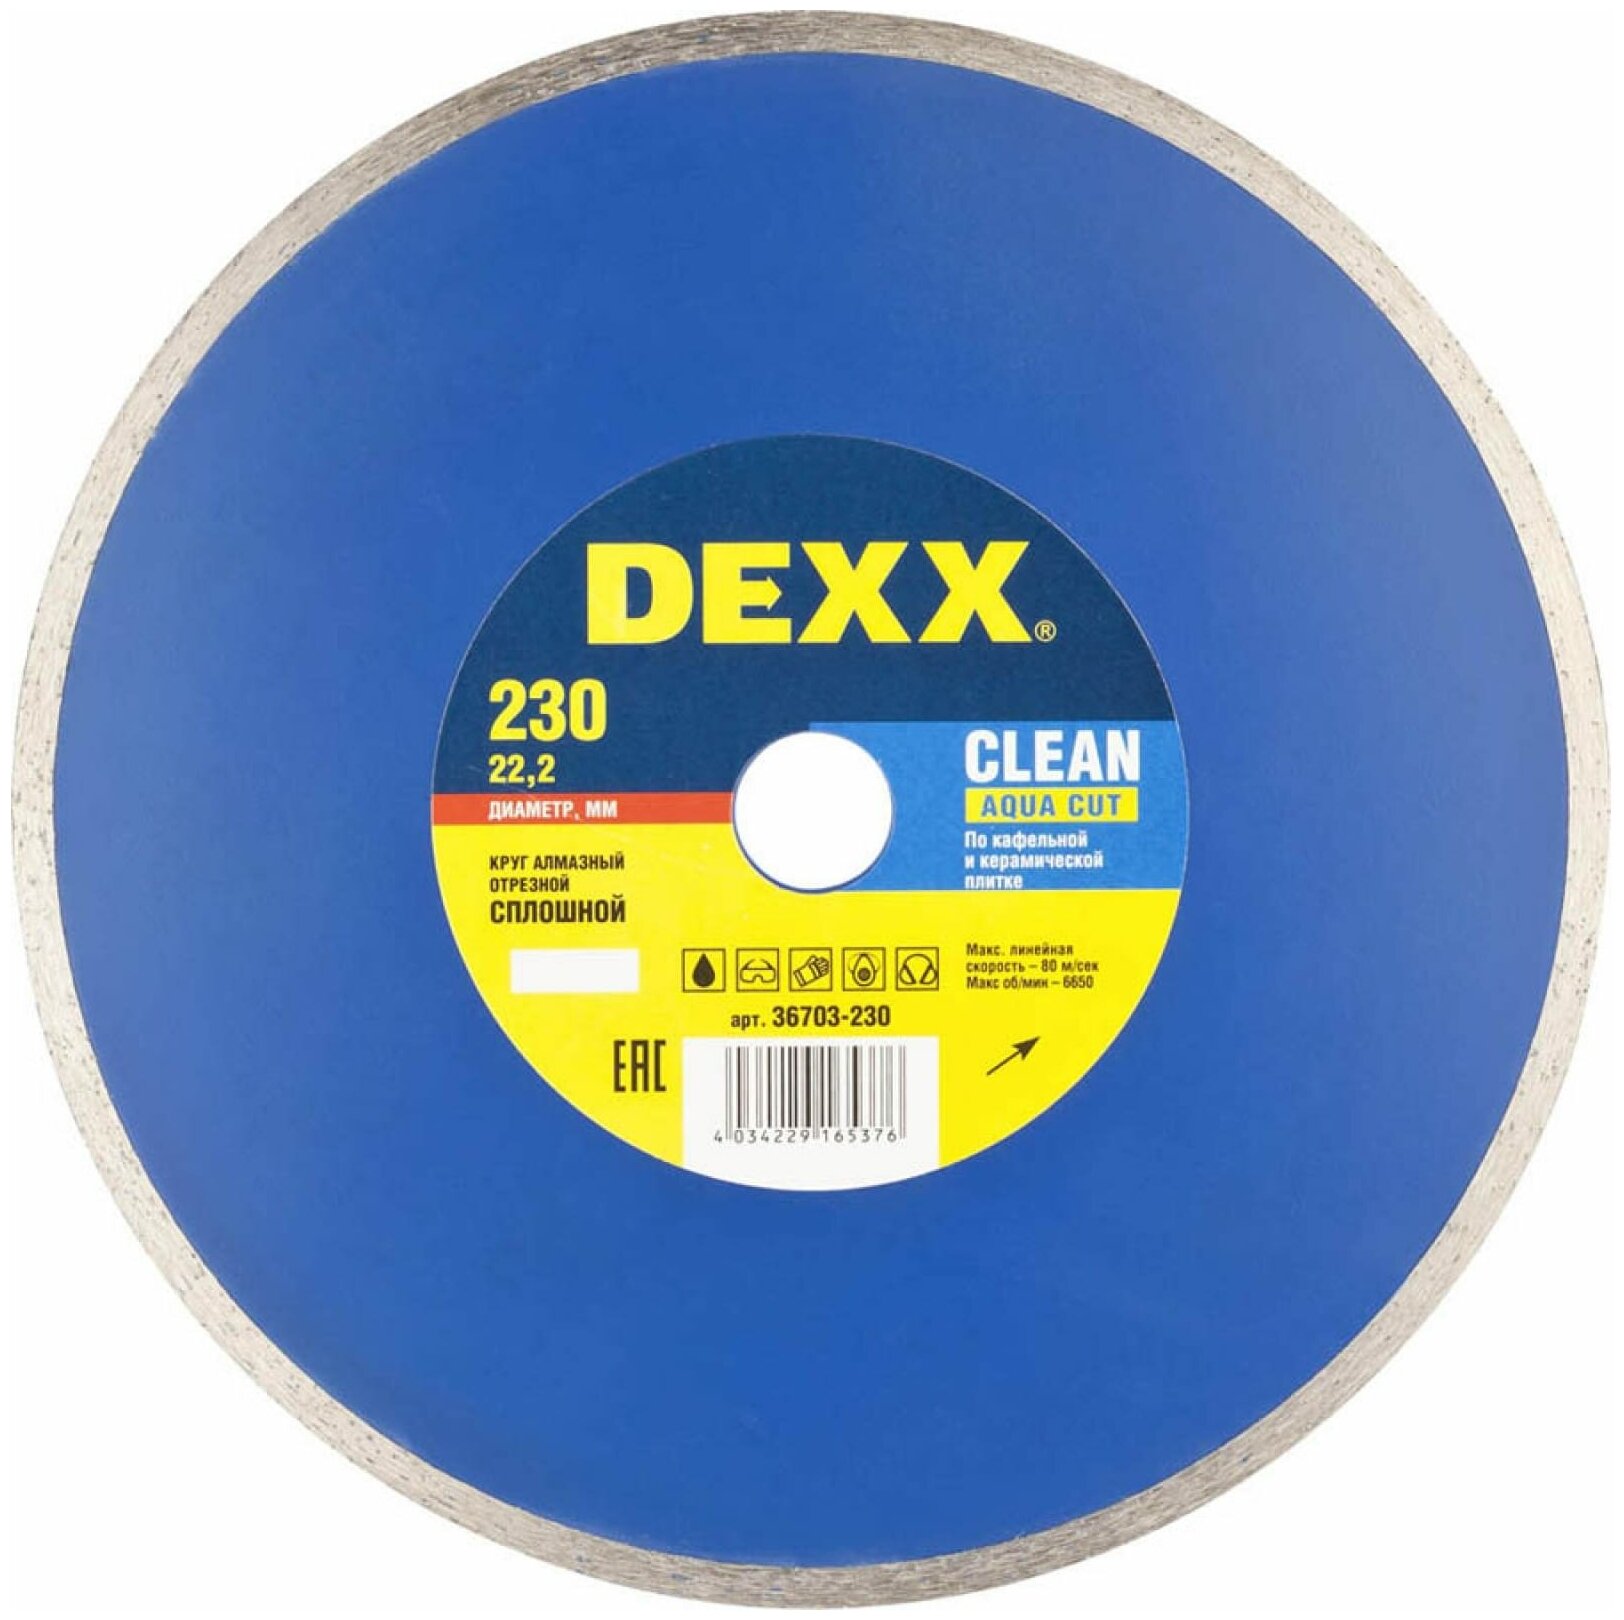     DEXX CLEAN AQUA CUT 230x22.2, -, . , ., 